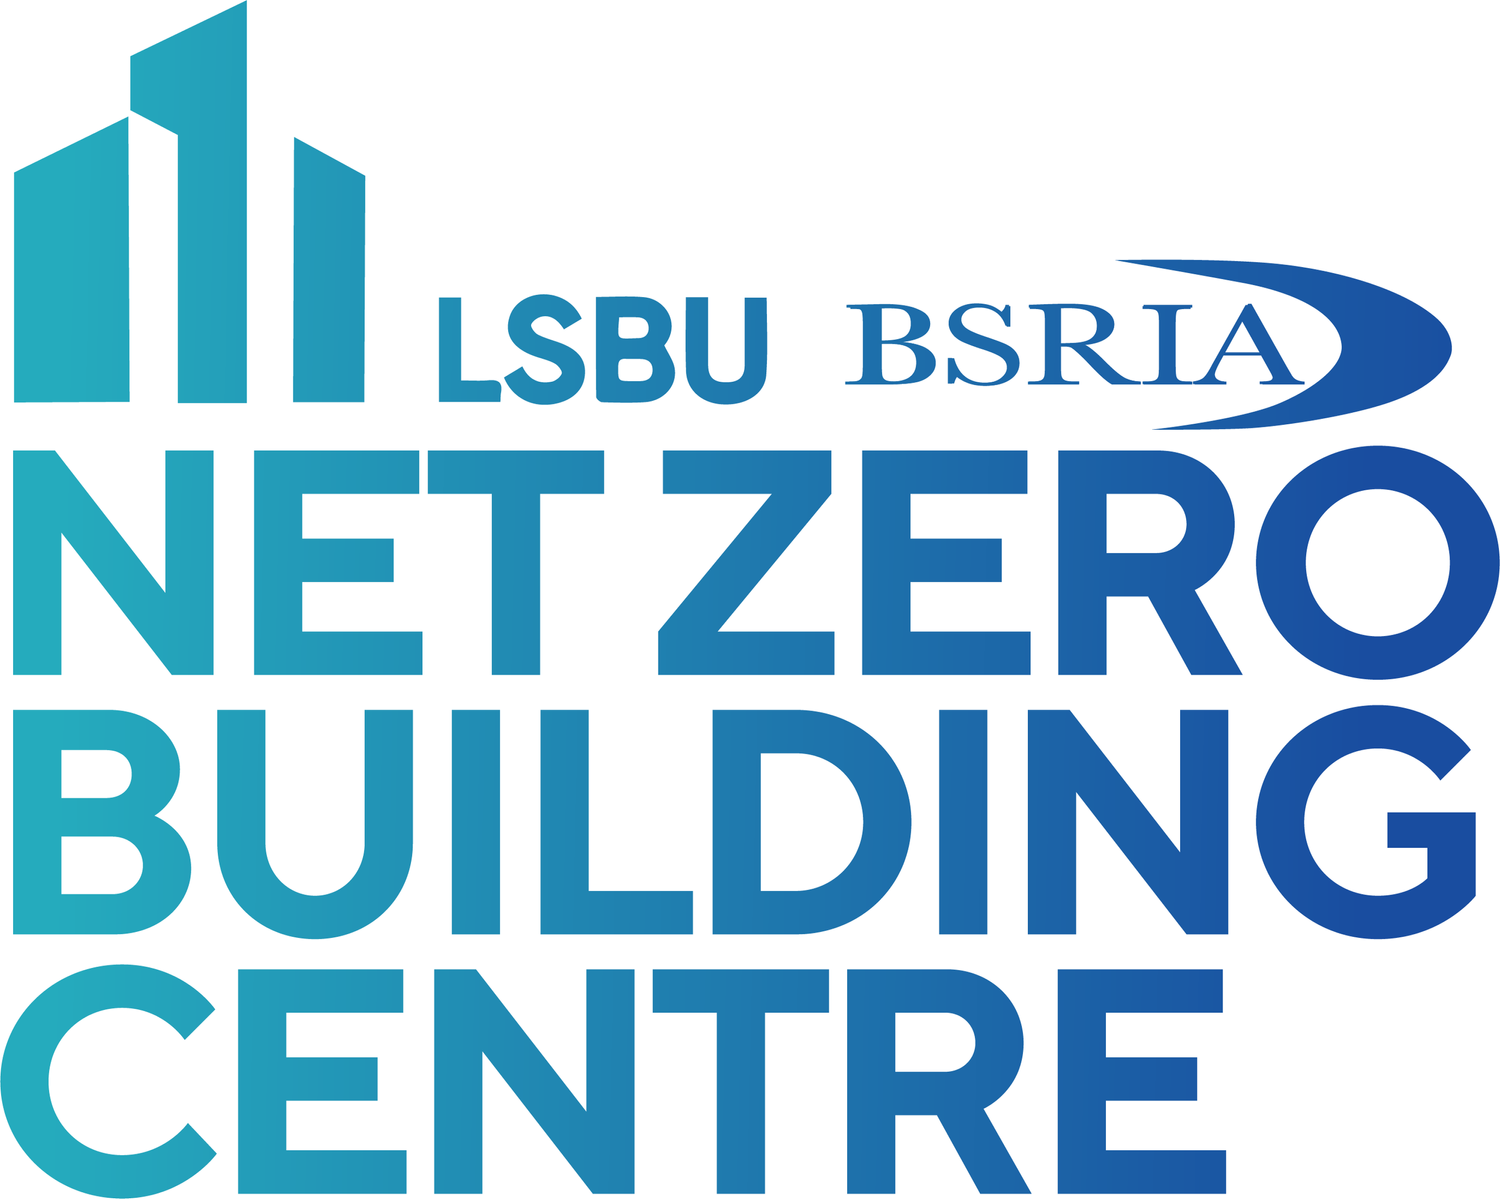 NET ZERO BUILDING CENTRE